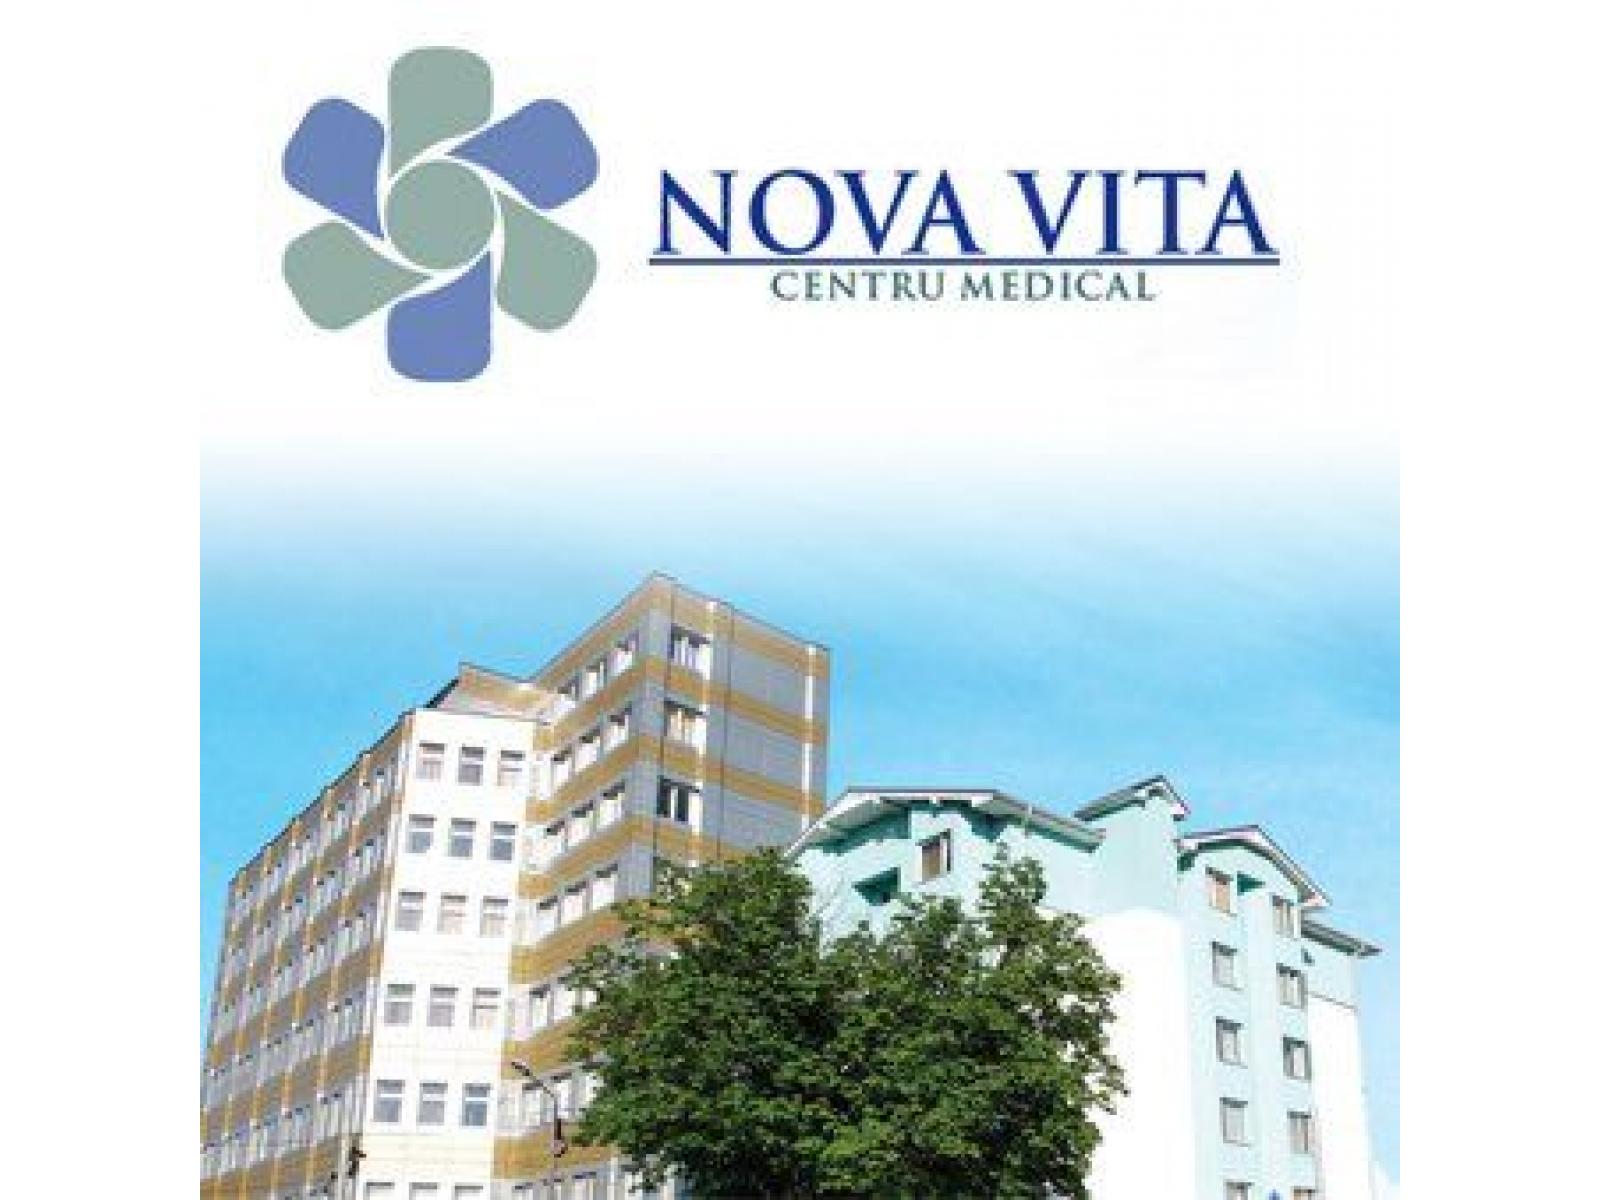 Centrul Medical NOVA VITA - 188558_193754590646097_4034558_n.jpg